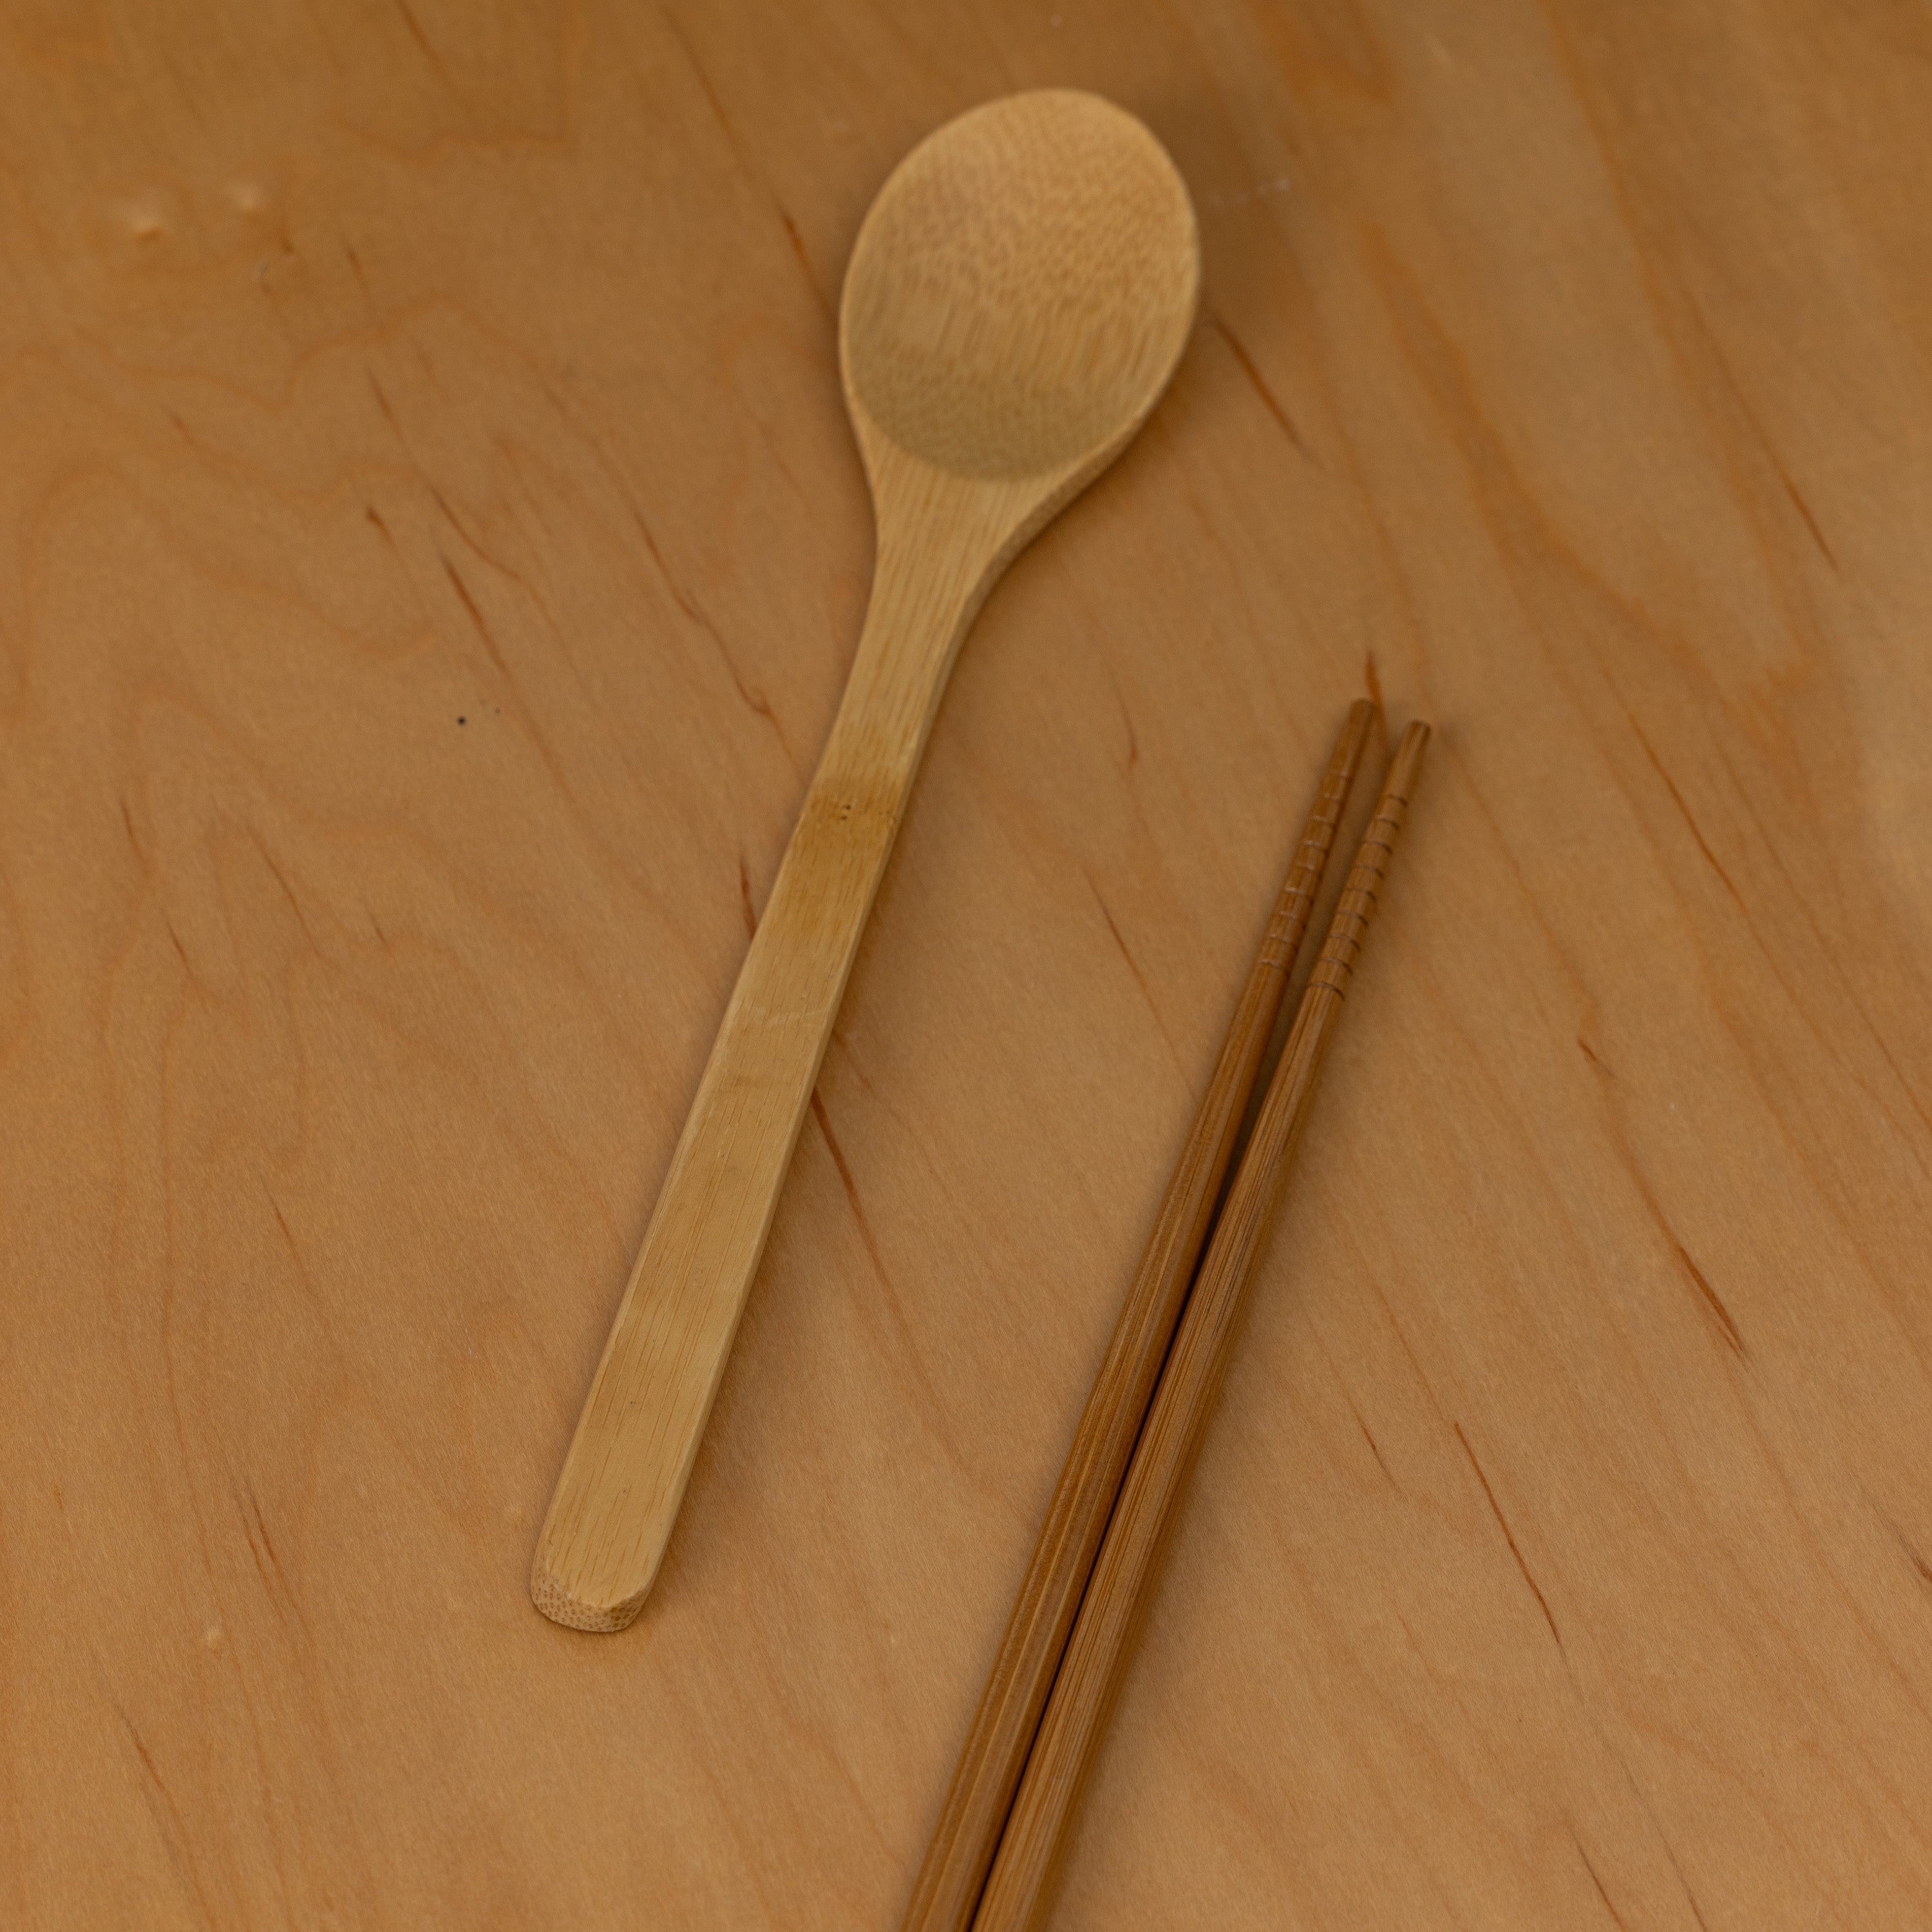 Bamboo Spoon & Chopsticks